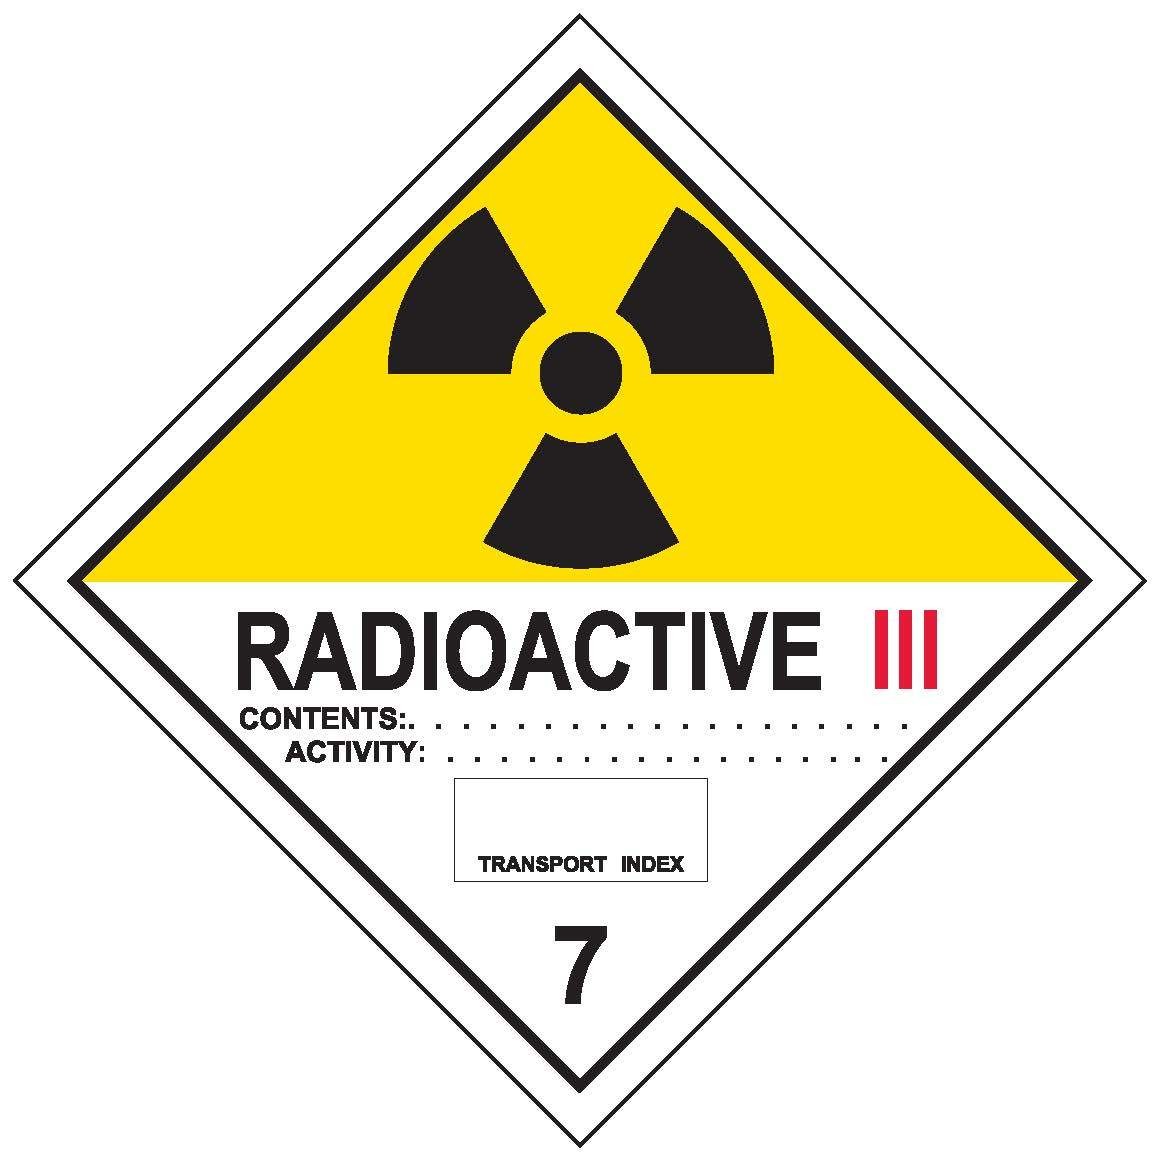 Radioactive 111 Class 7